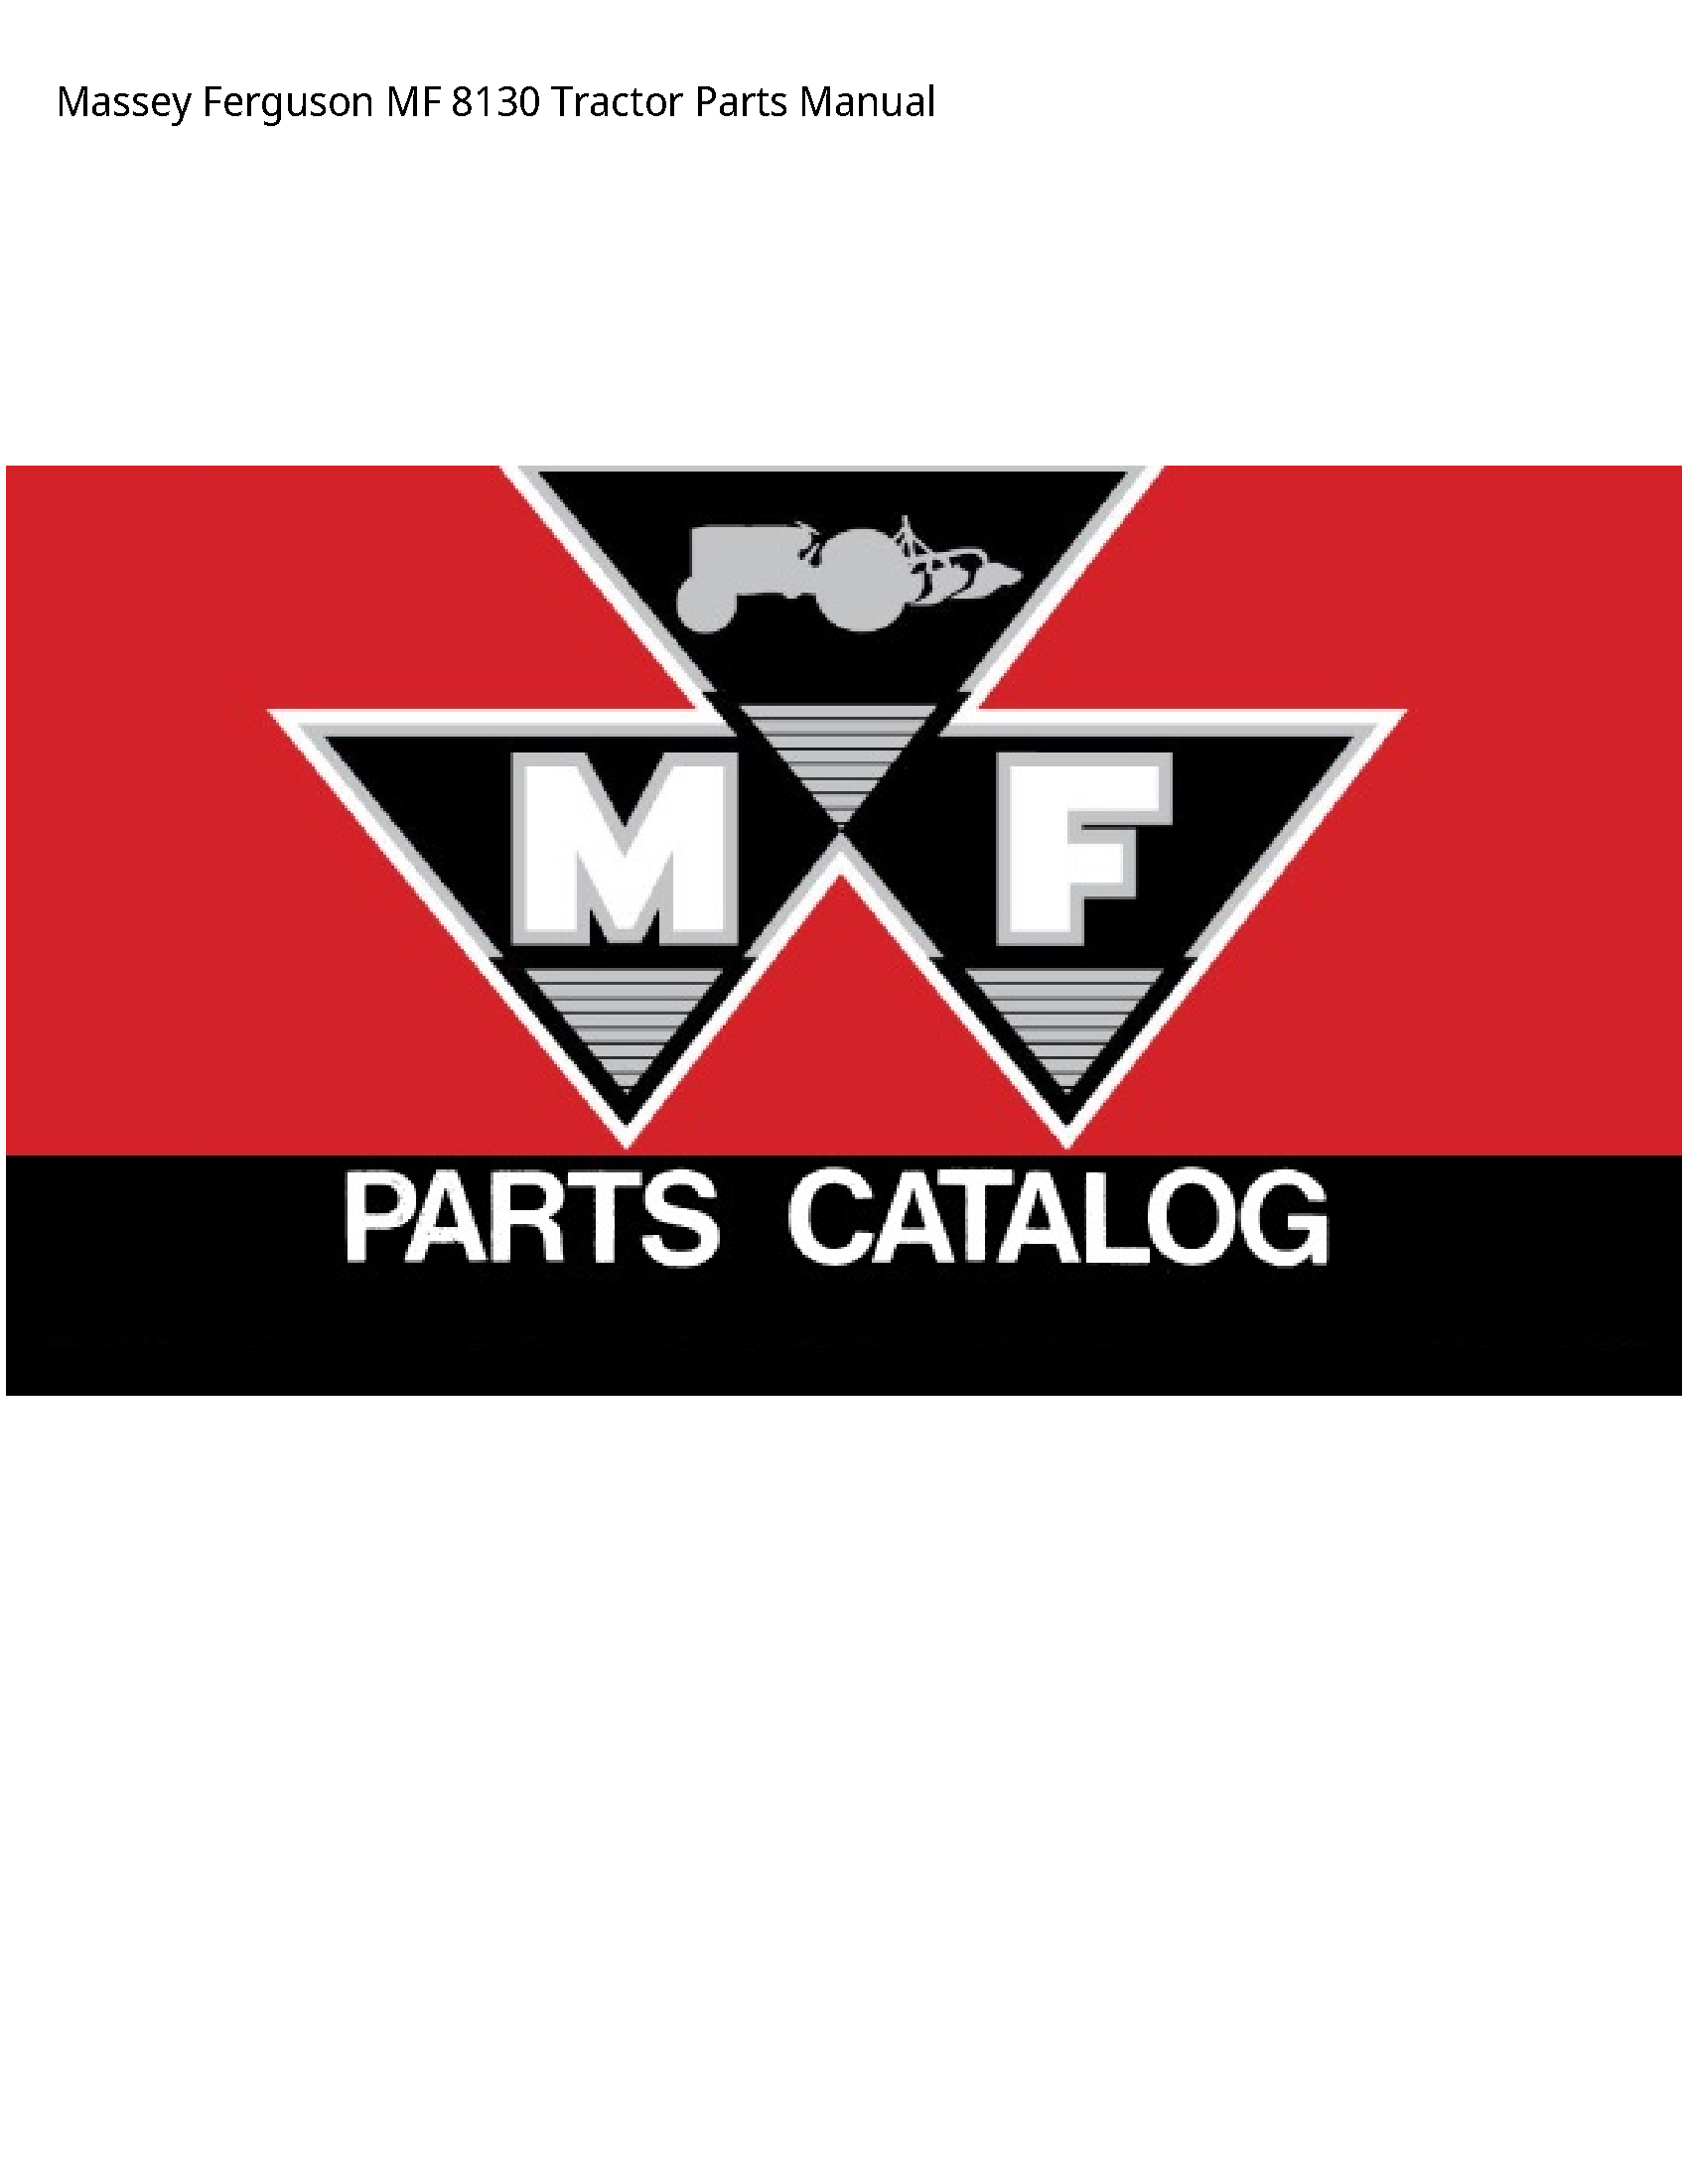 Massey Ferguson 8130 MF Tractor Parts manual